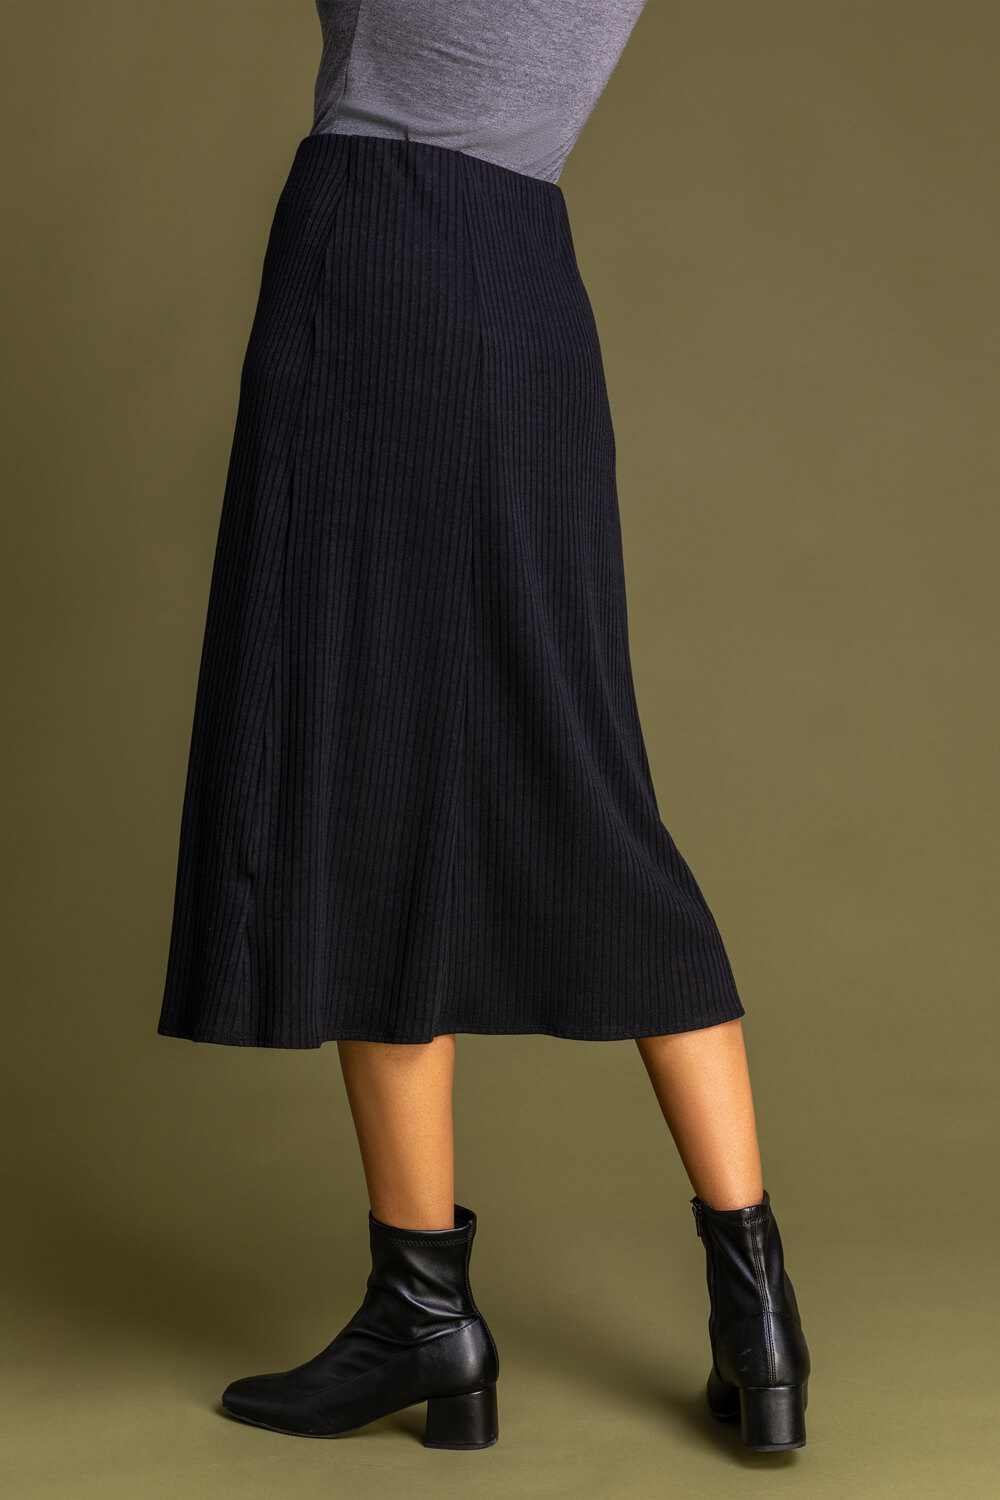 Black Ribbed Midi Length Skirt, Image 2 of 4